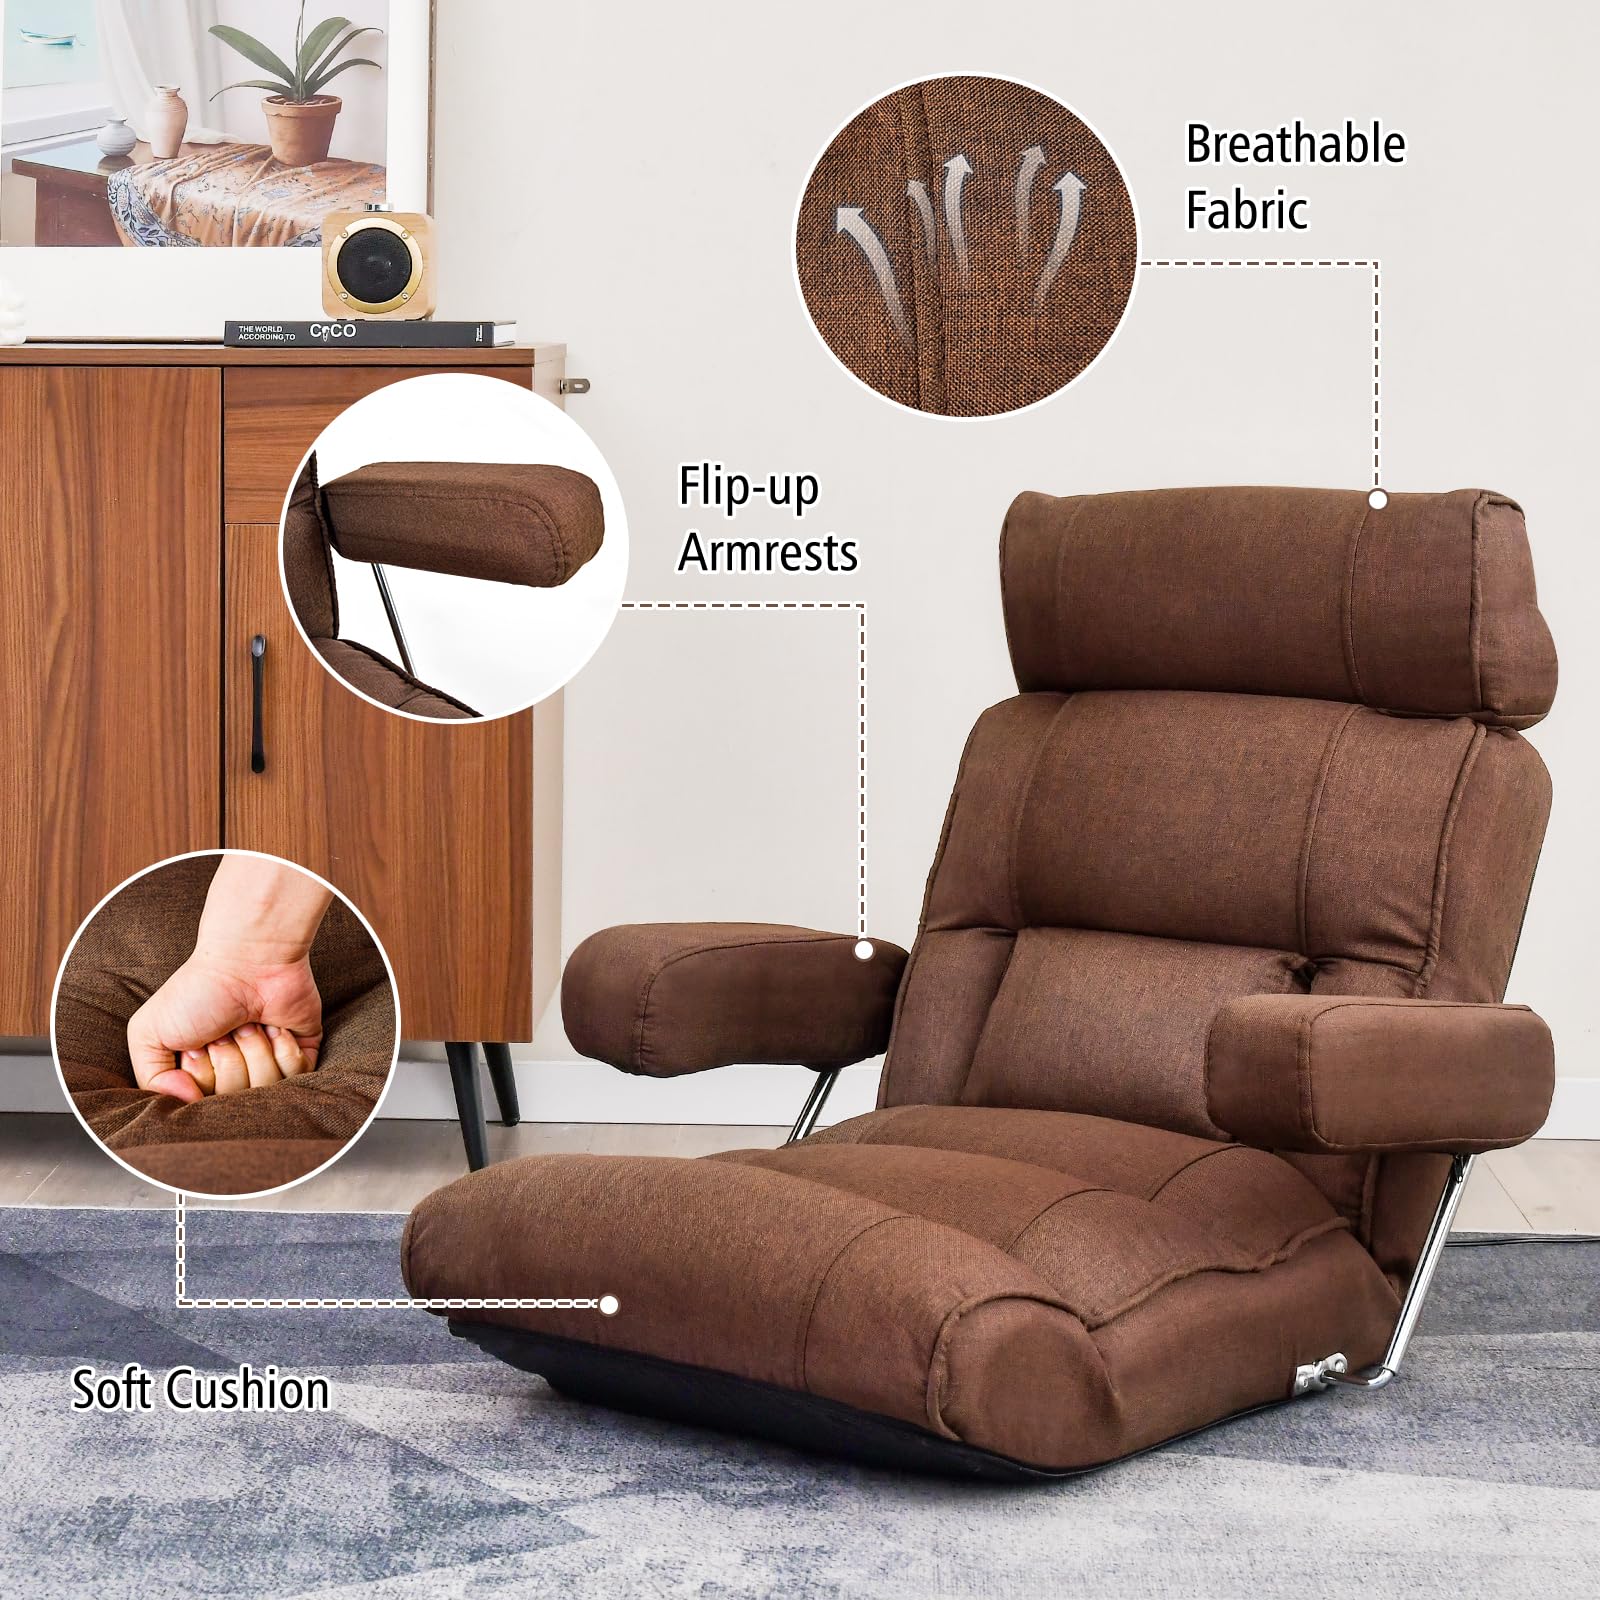  Adjustable Folding Sofa Chair - Giantex